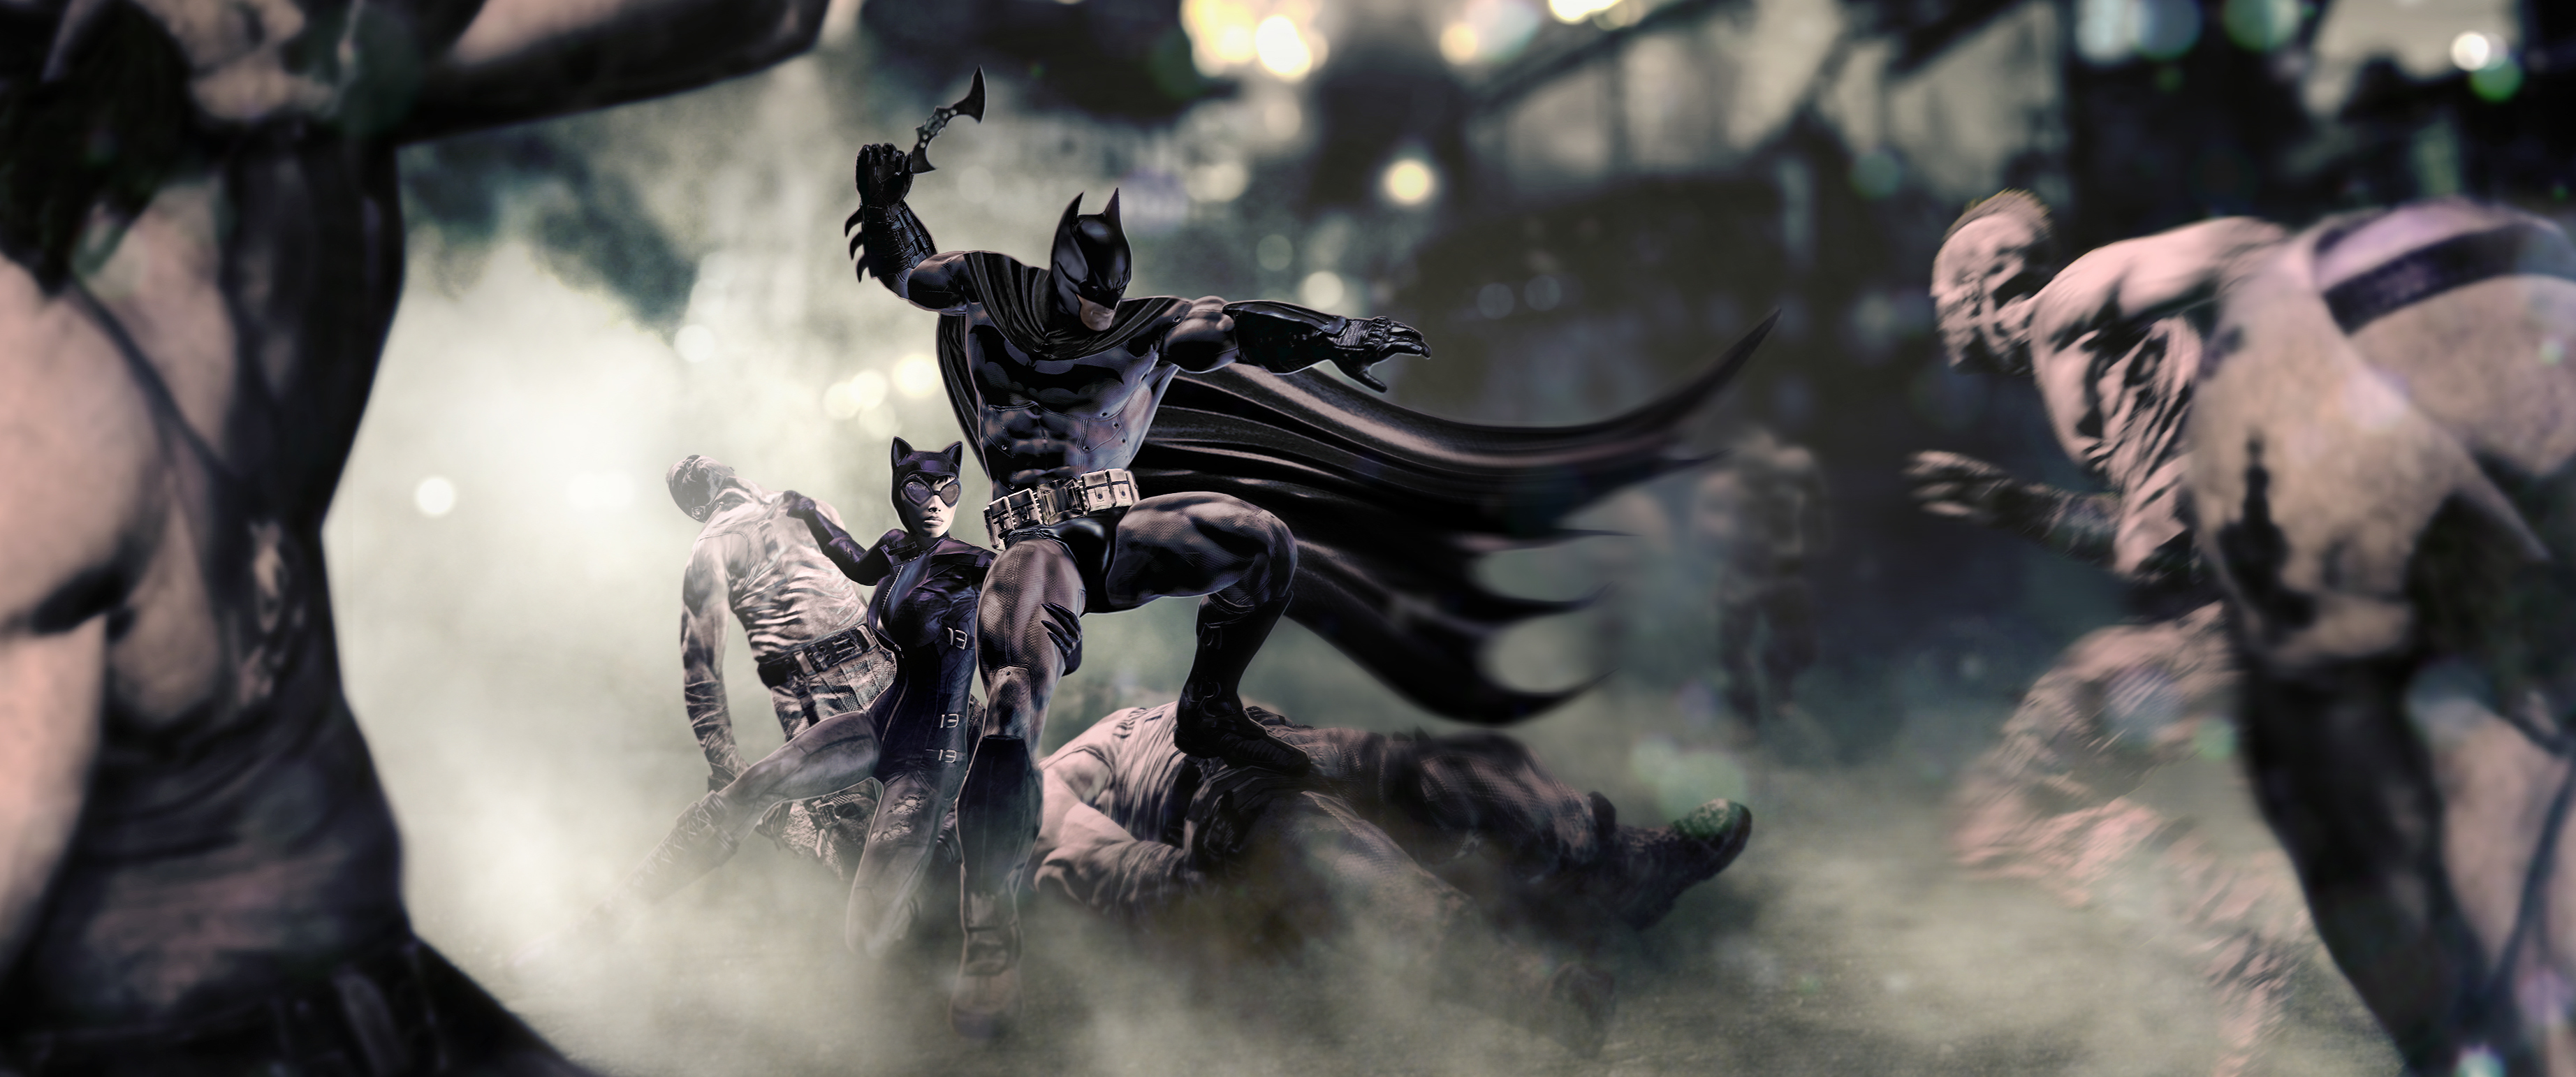 Video Game Batman: Arkham City Wallpaper